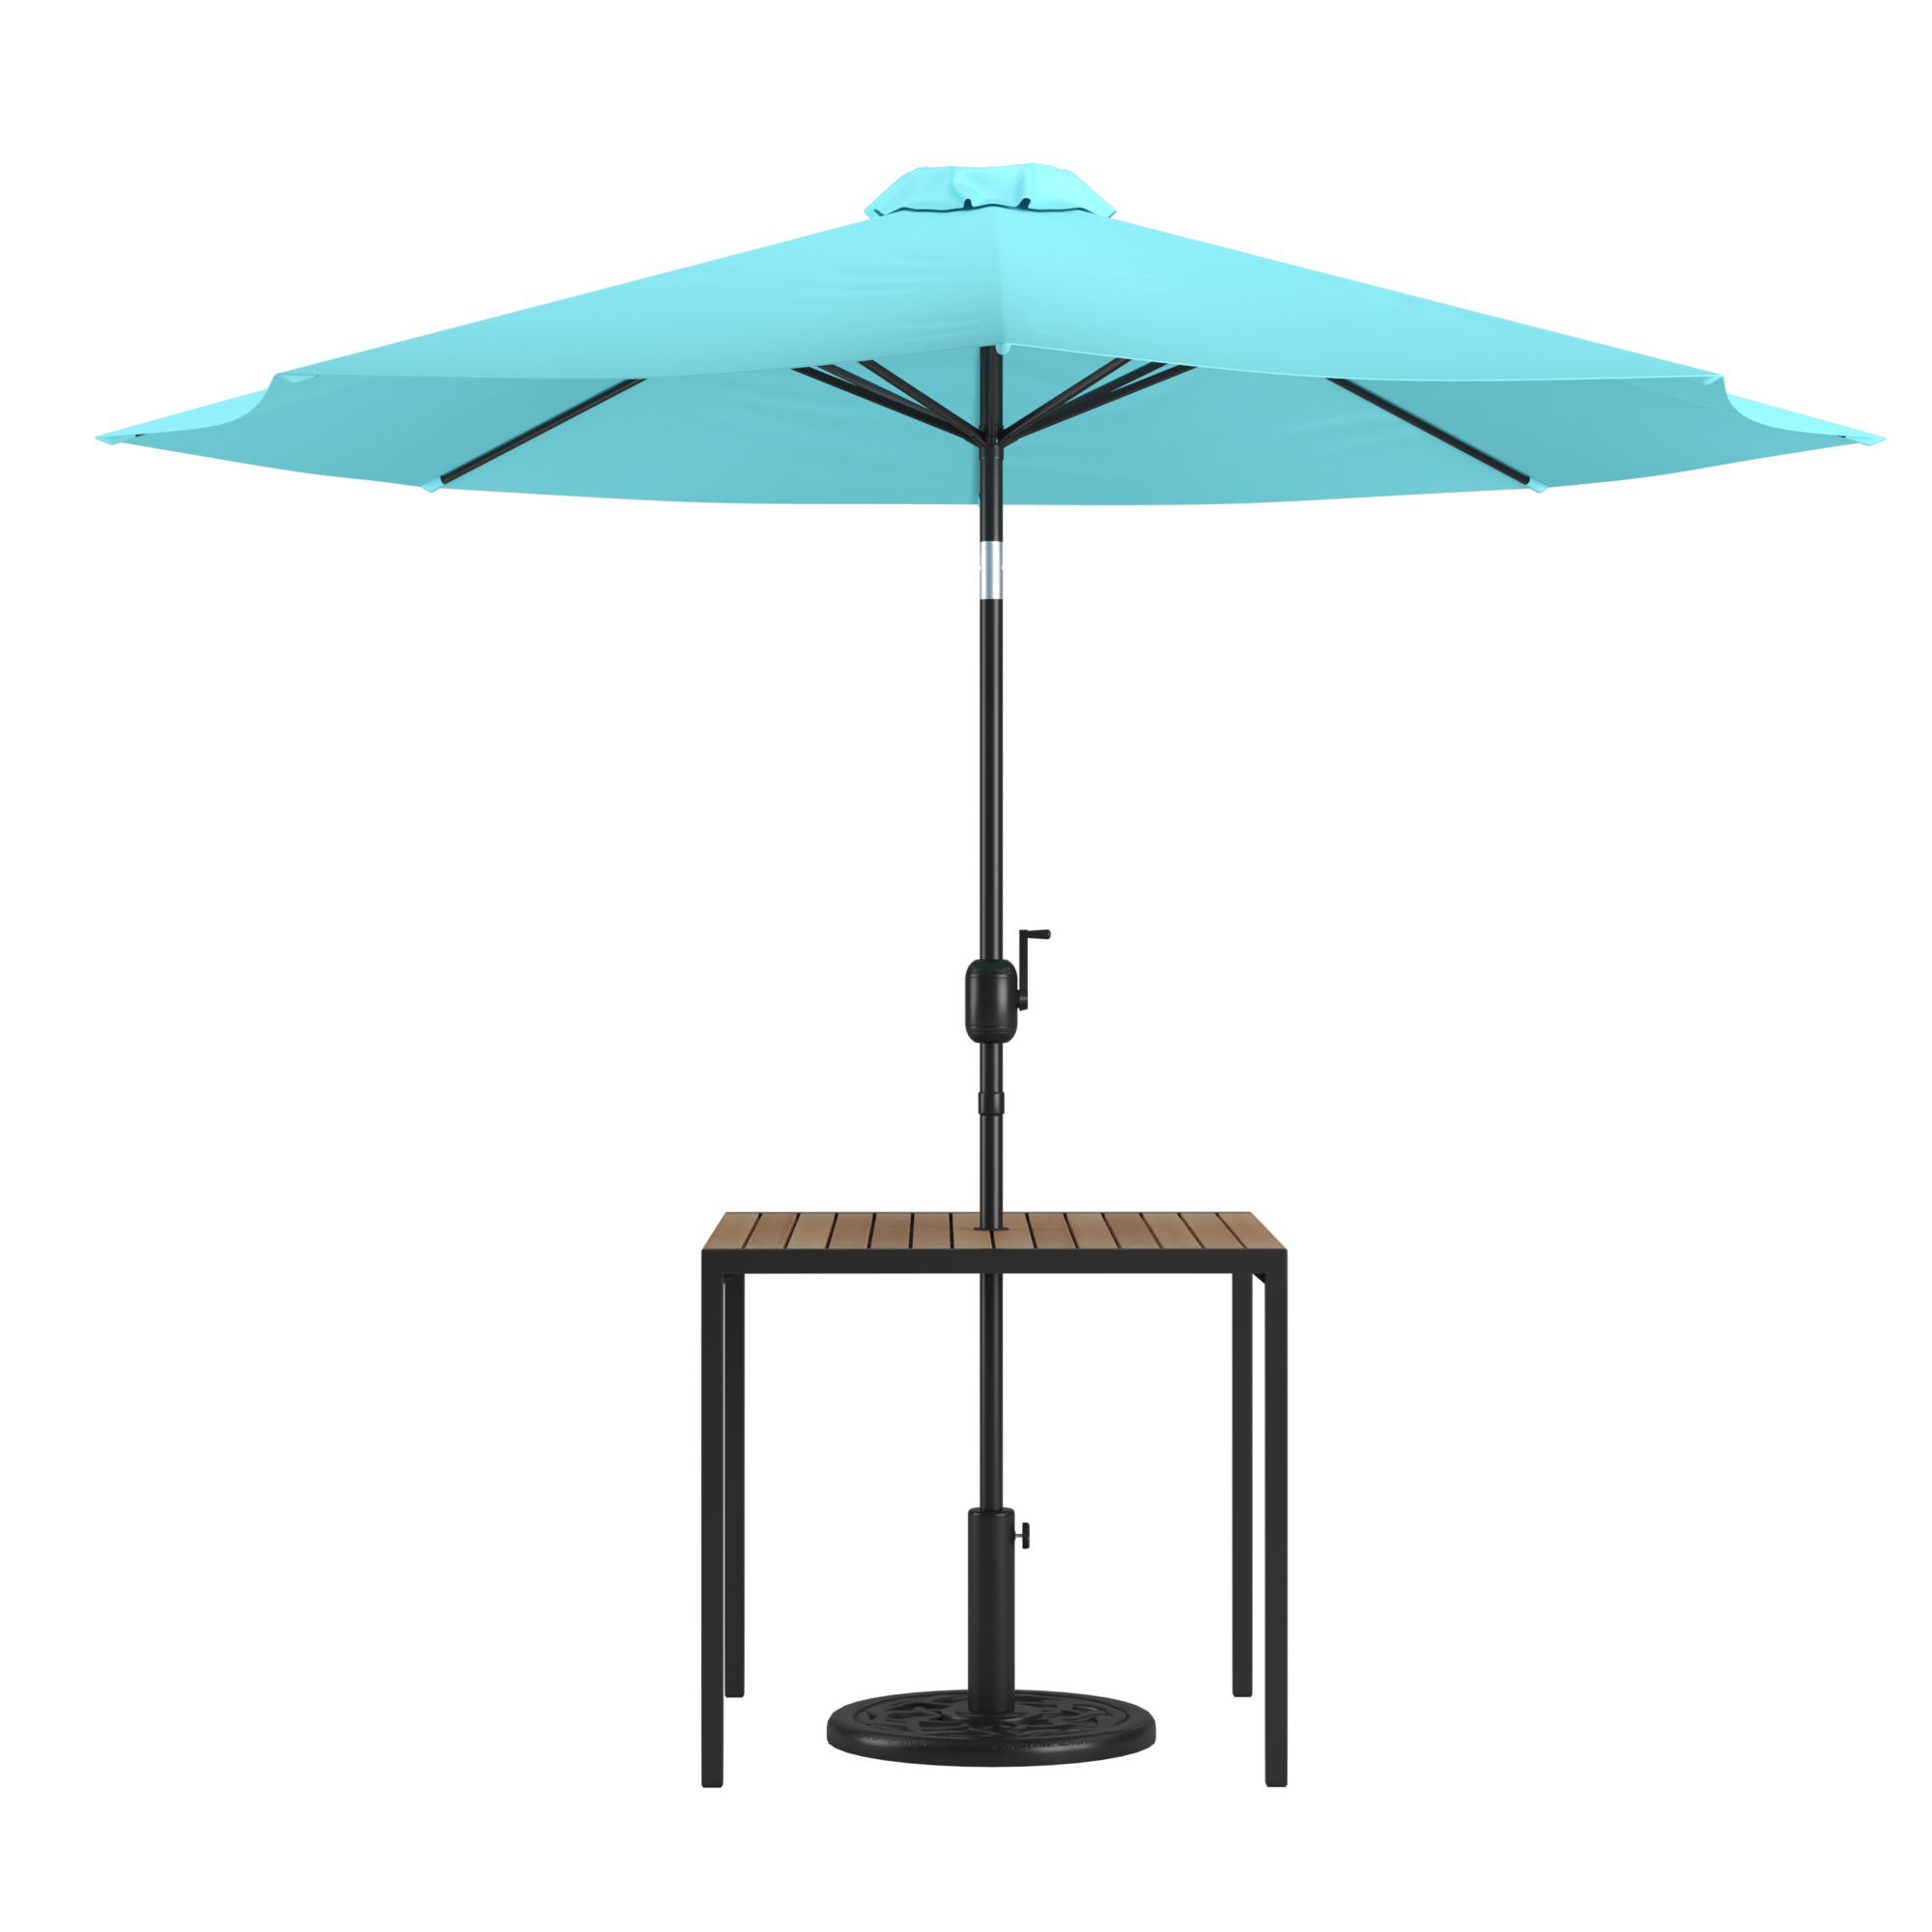 Flash Furniture, Faux Teak 35Inch Patio Table-Tan Umbrella Base, Table Shape Square, Primary Color Blue, Height 29.5 in, Model XU8100UB19BTL